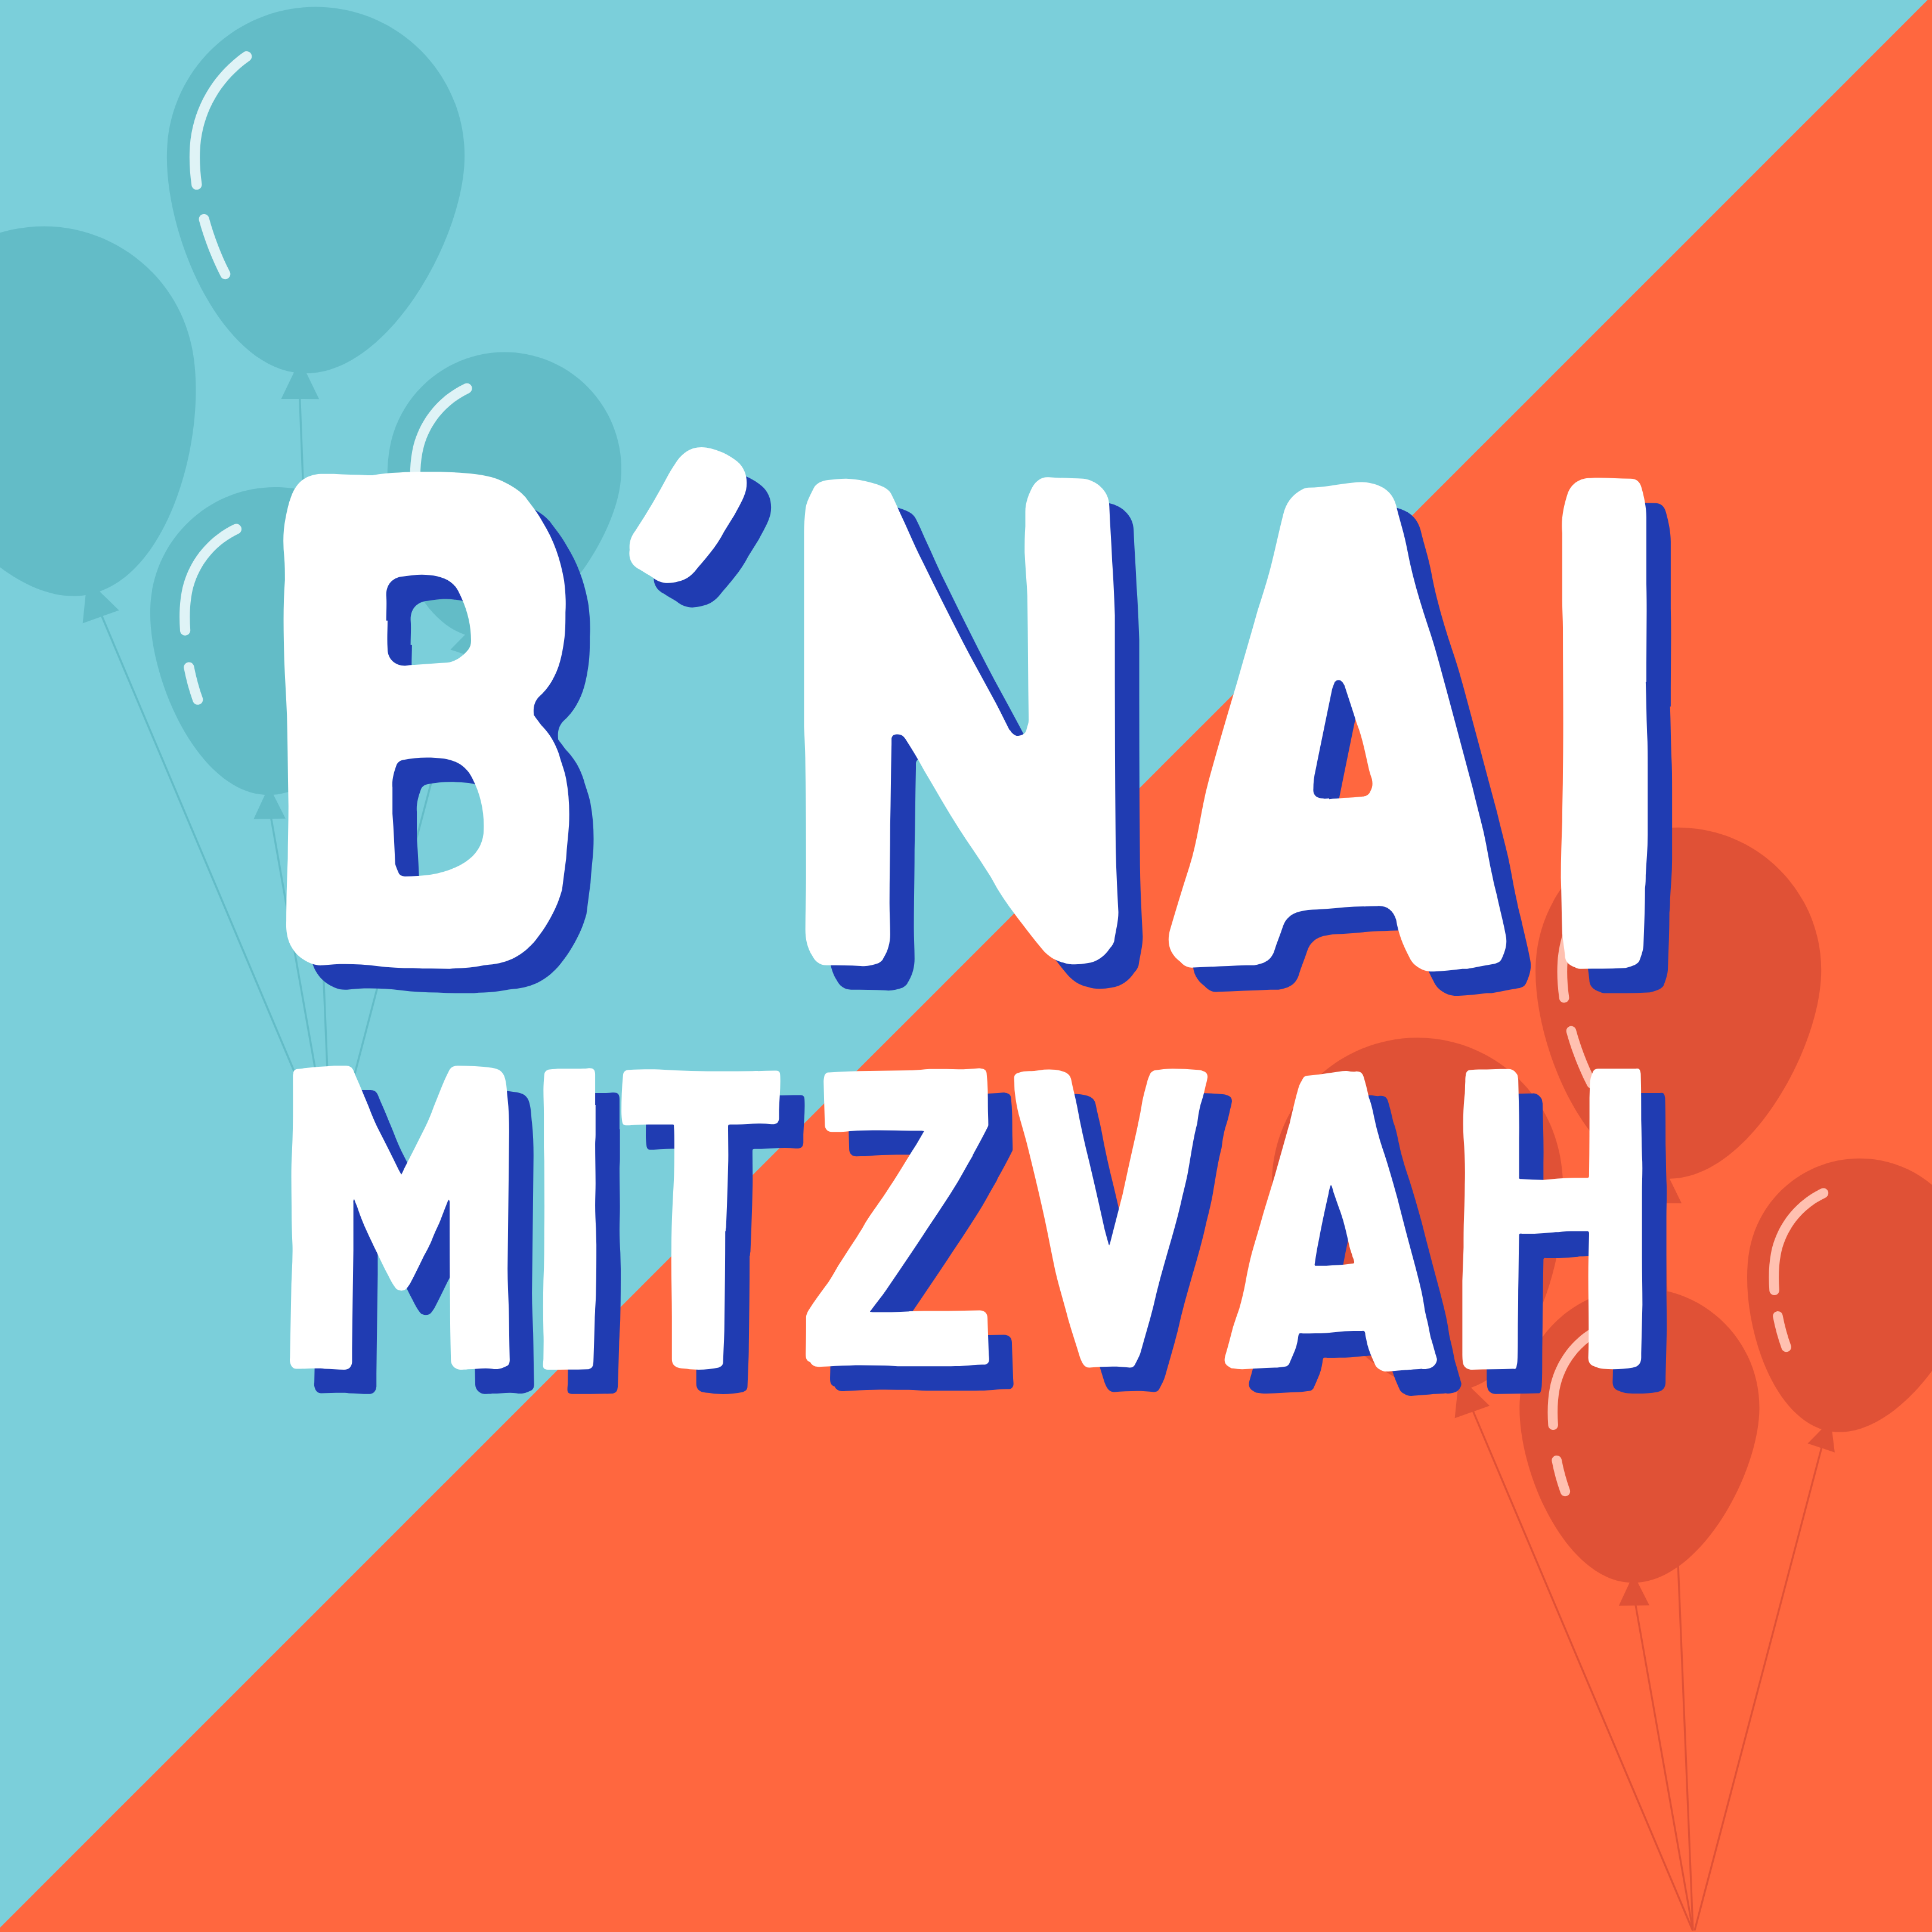 Emily Katz Bat Mitzvah